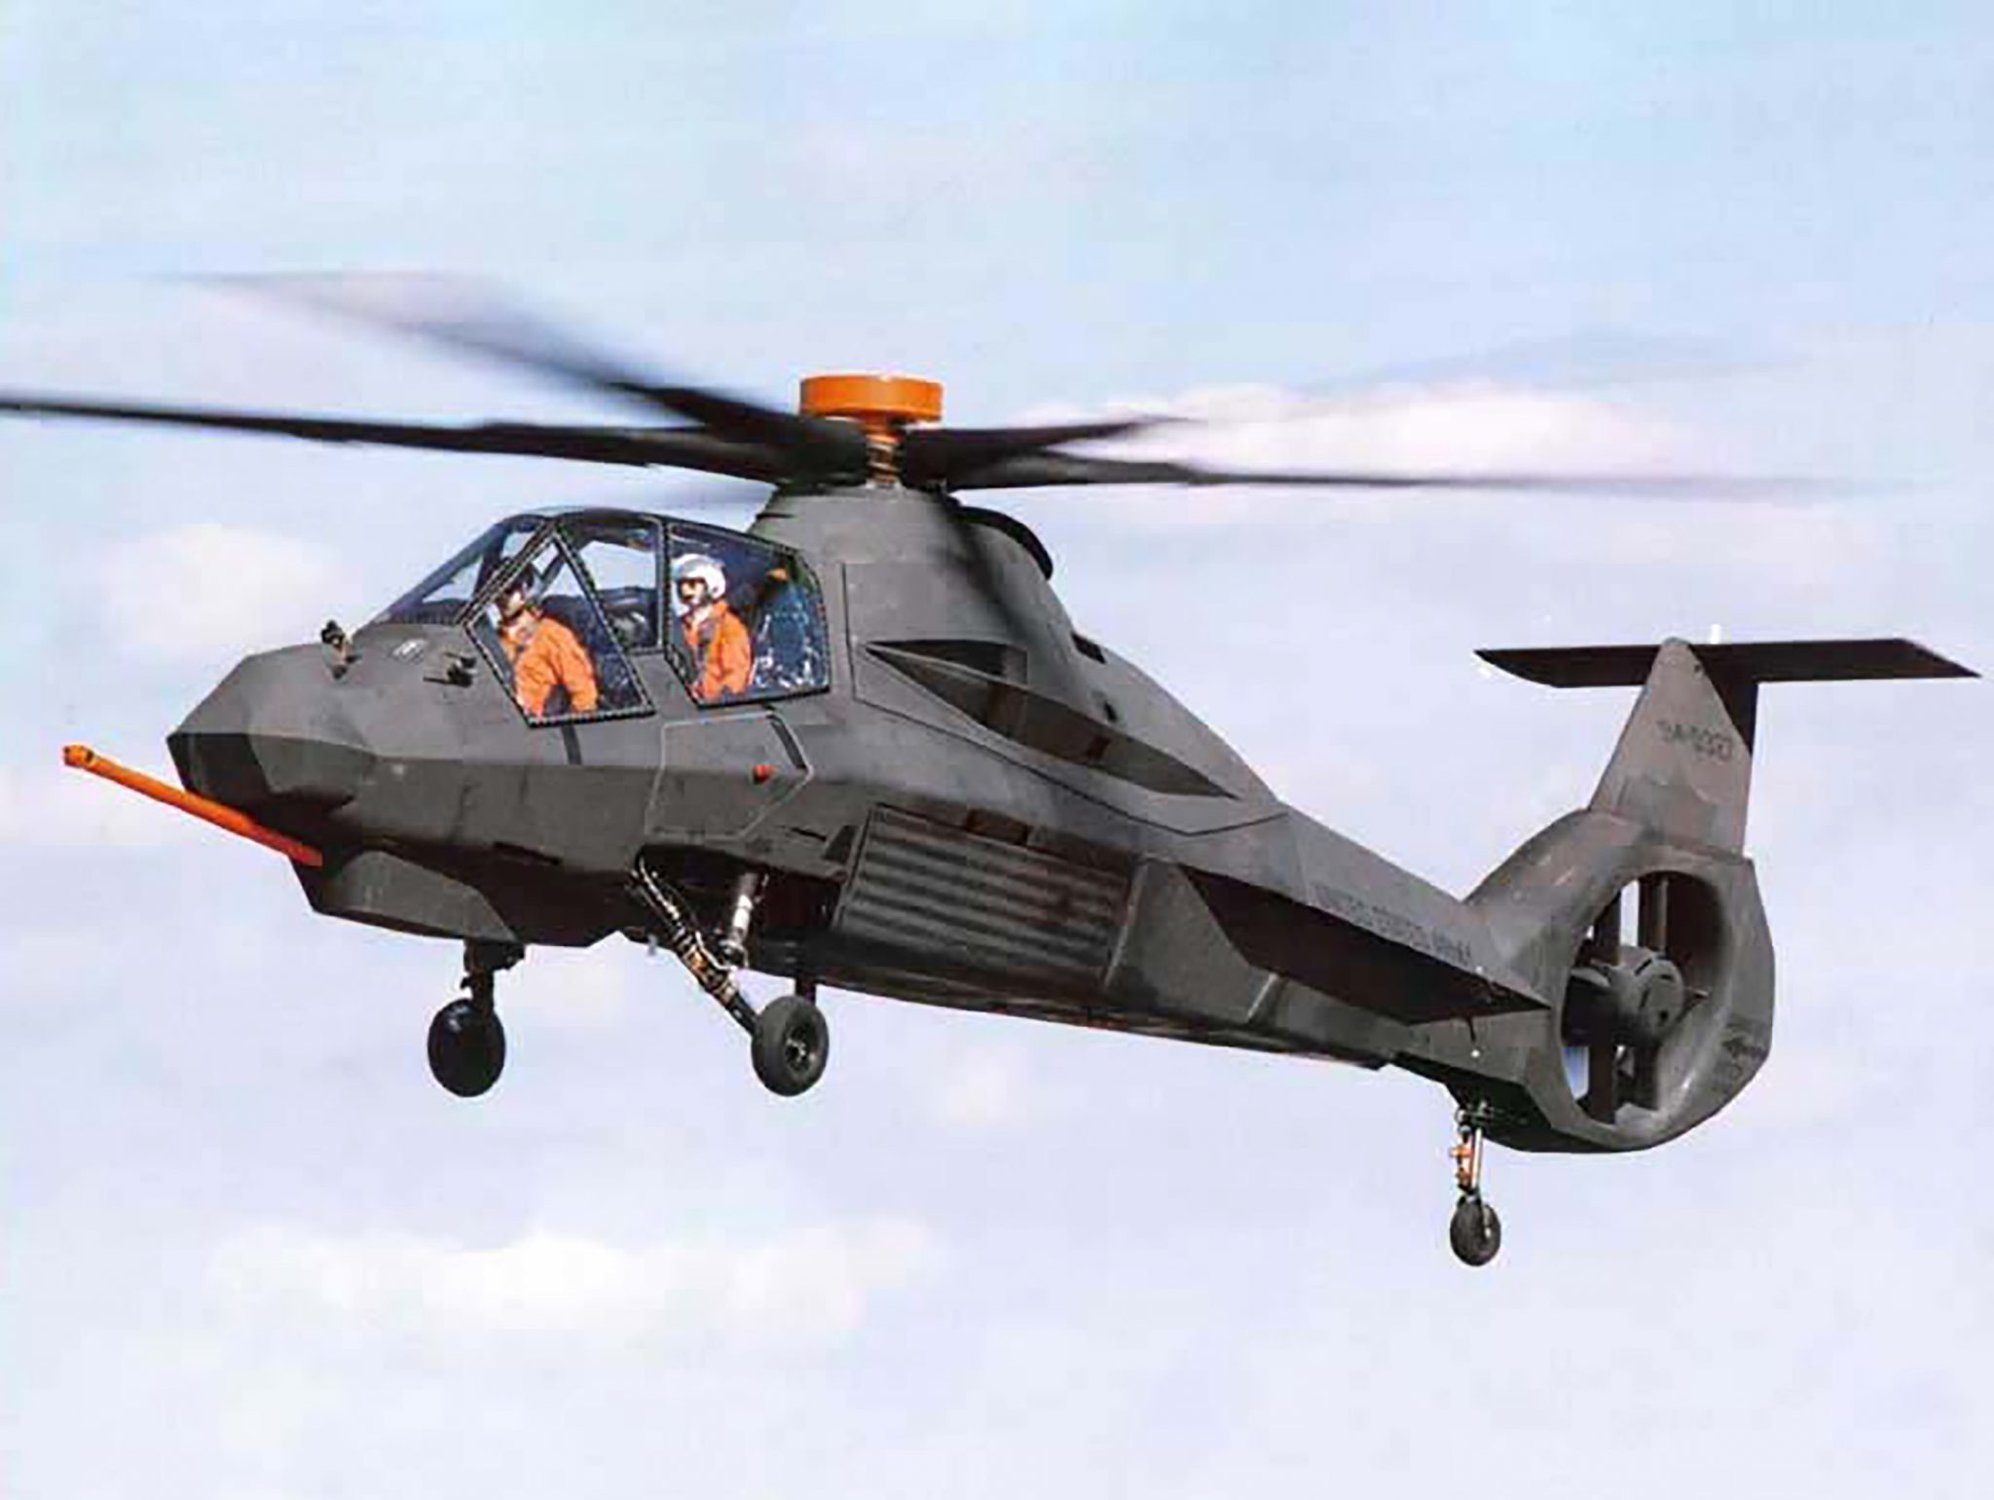 Boeing-Sikorsky RAH-66 Comanche rotorcraft